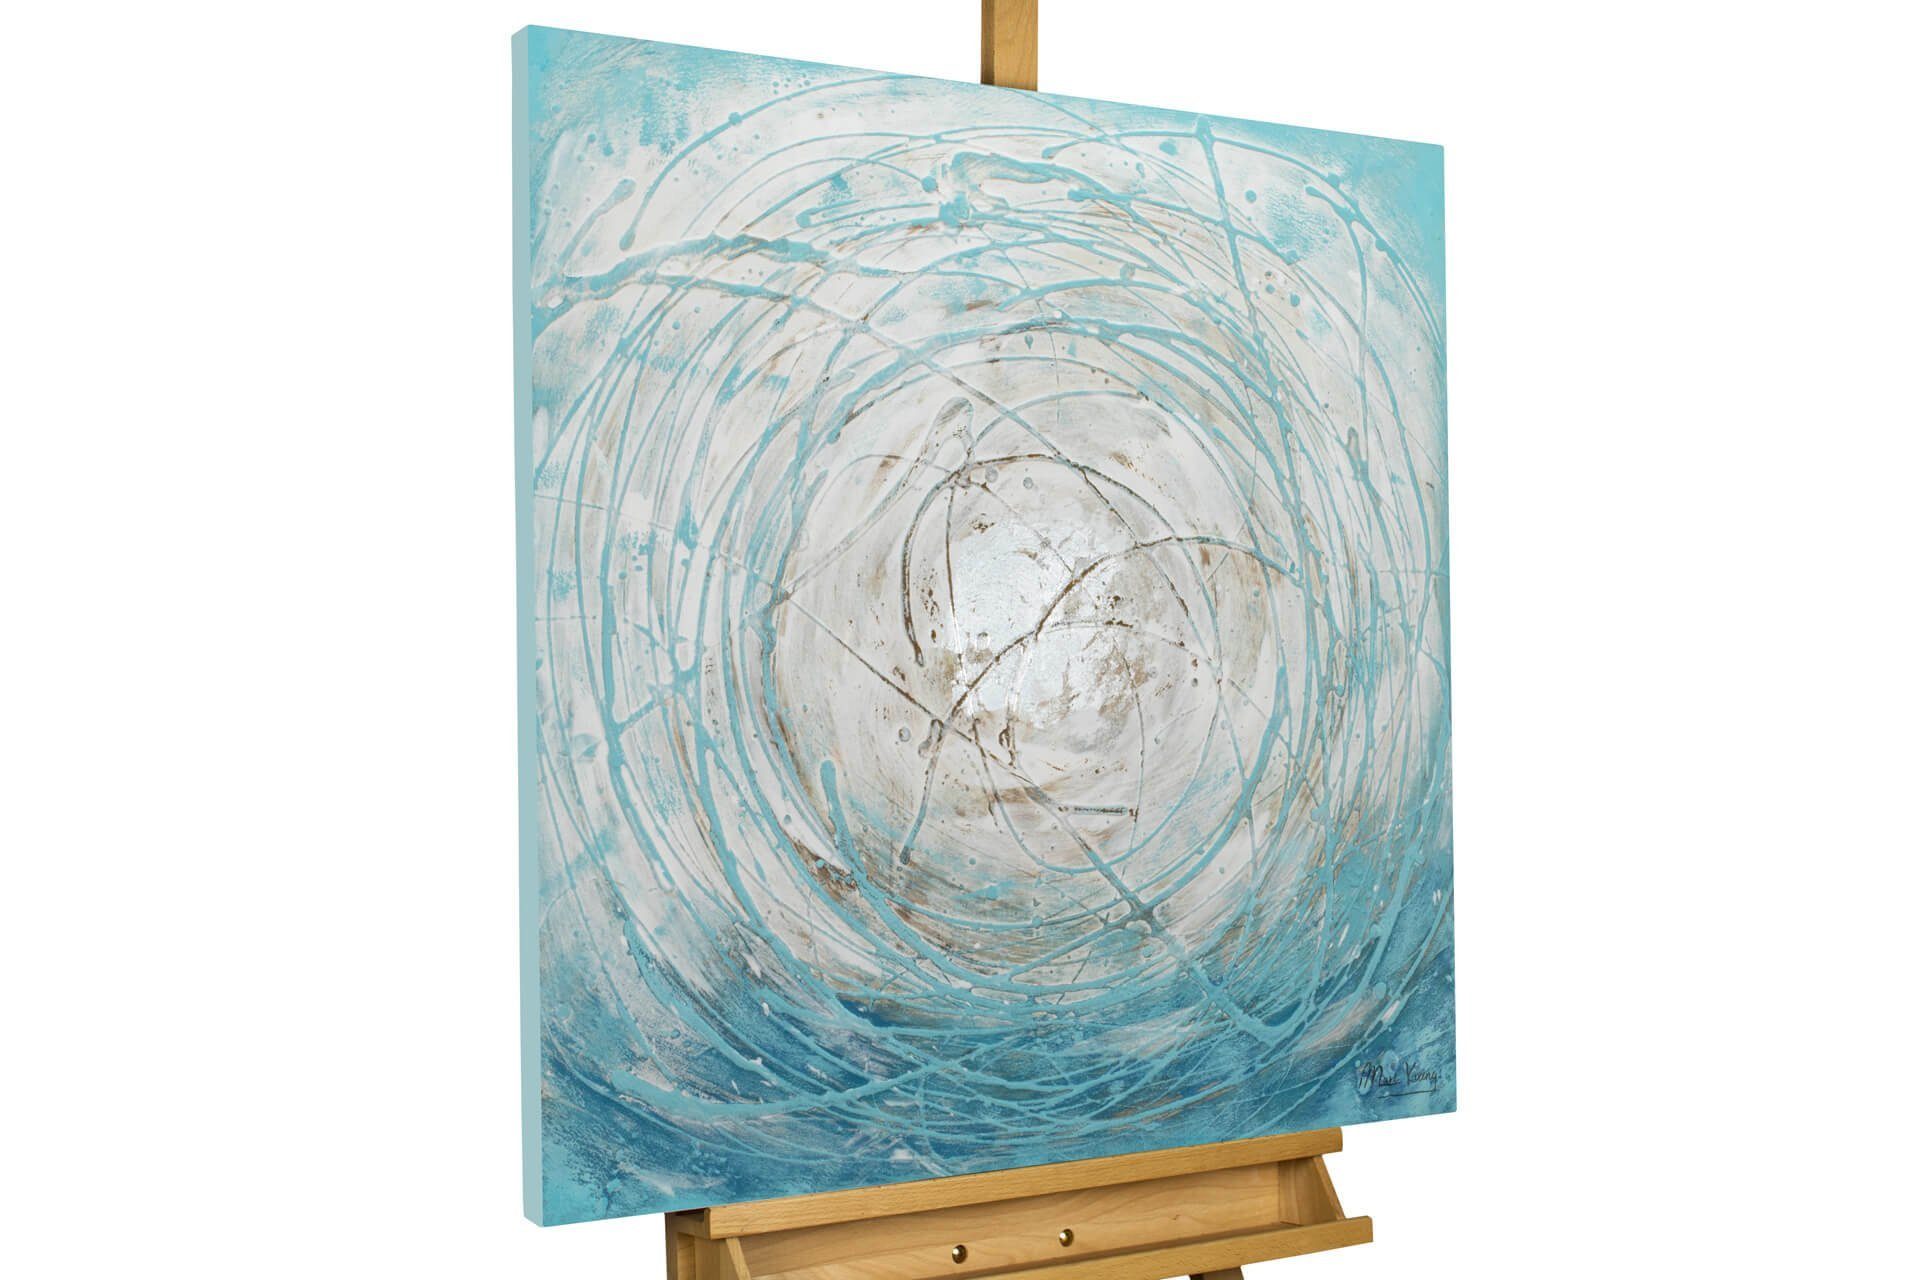 KUNSTLOFT Gemälde Stürme aus Eis 80x80 cm, Leinwandbild 100% HANDGEMALT Wandbild Wohnzimmer